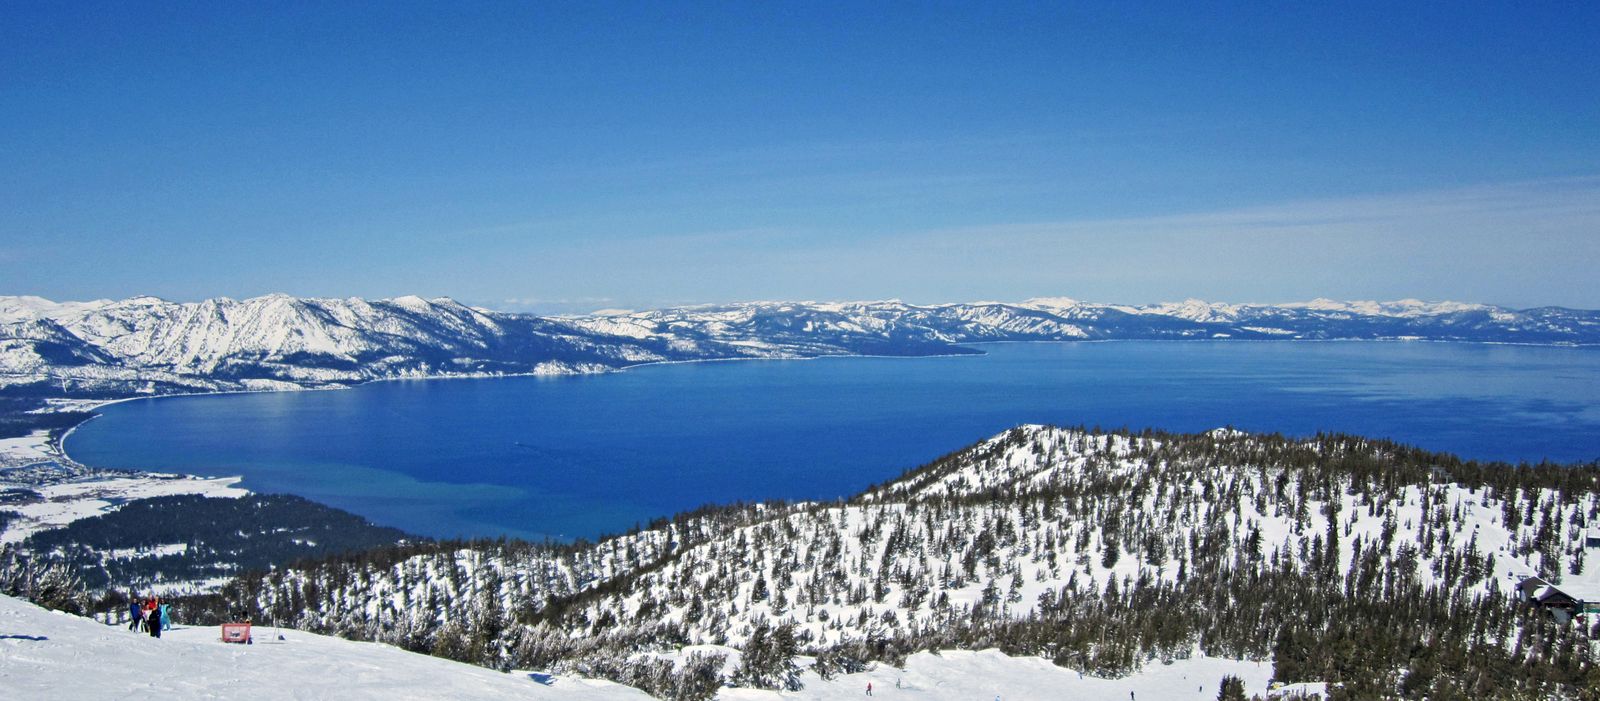 Heavenly - South Lake Tahoe